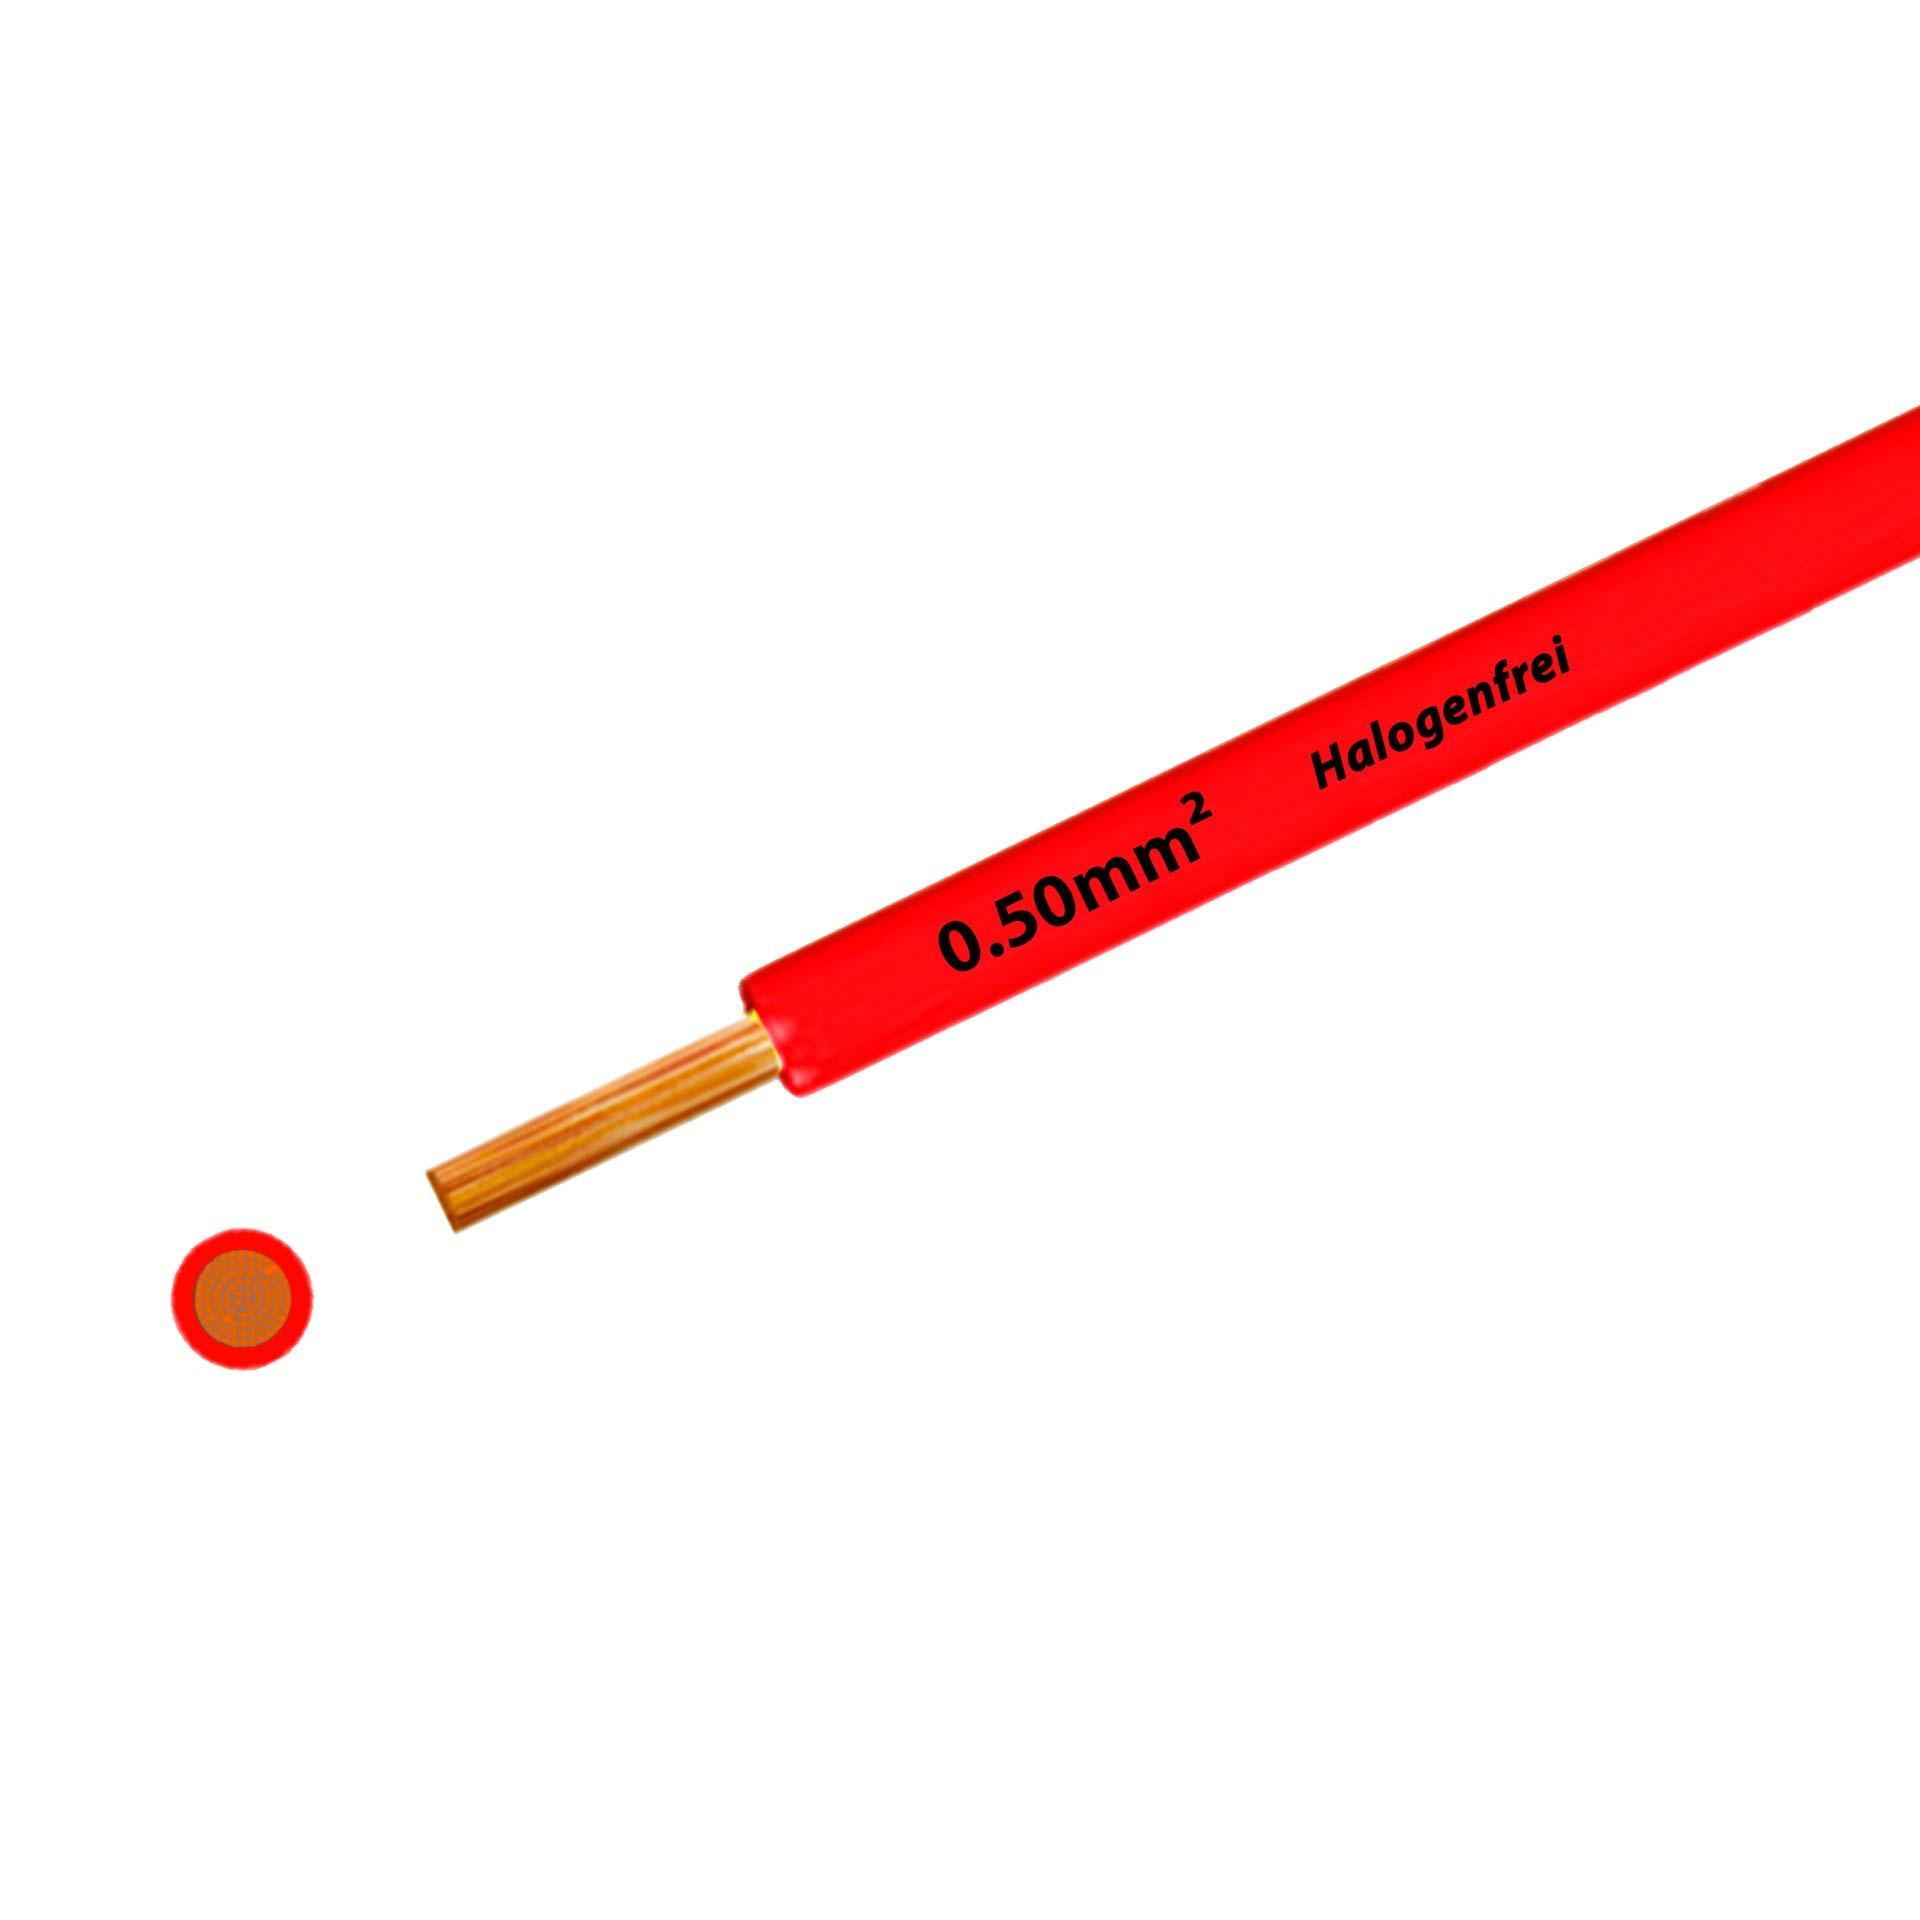 Litze halogenfrei 90° C , 500V, 0.50mm2, rot (RAL 3000), auf Kunststoffrolle